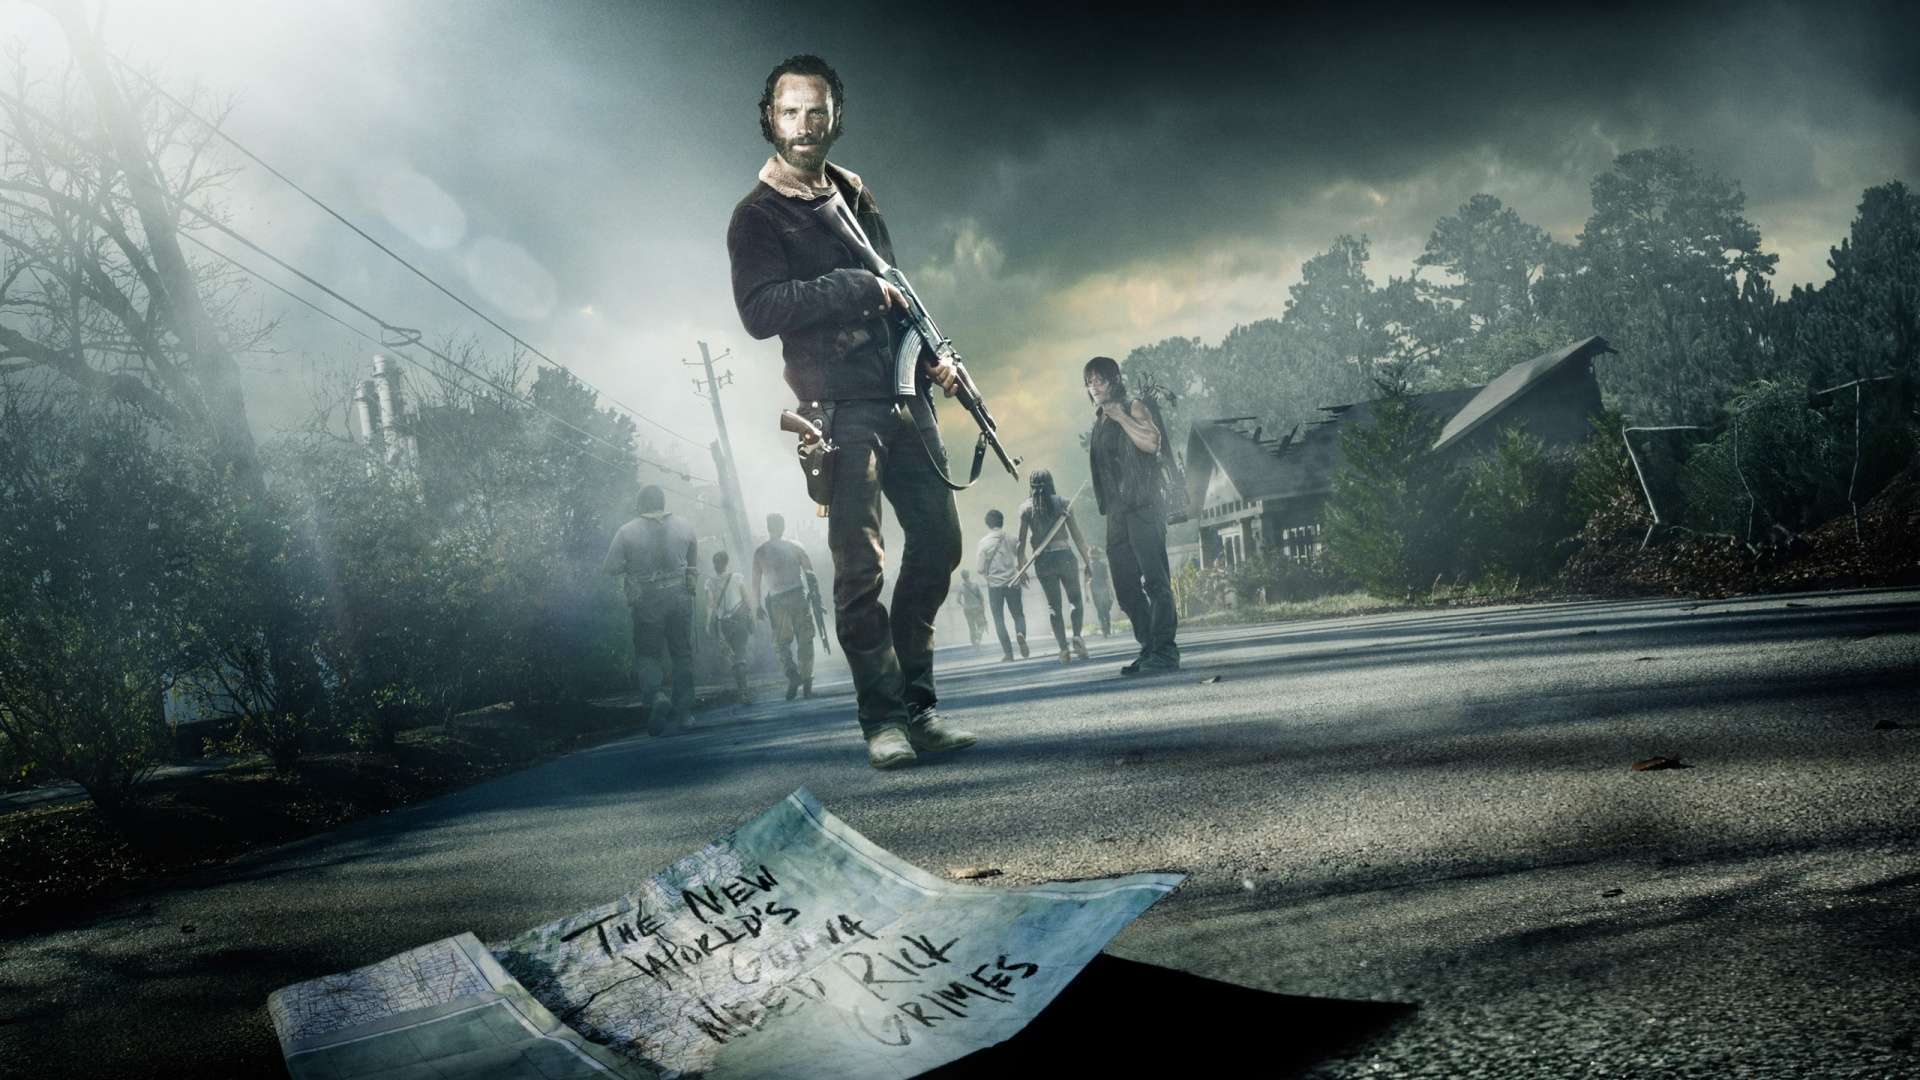 Wallpaper The Walking Dead Season Upload At